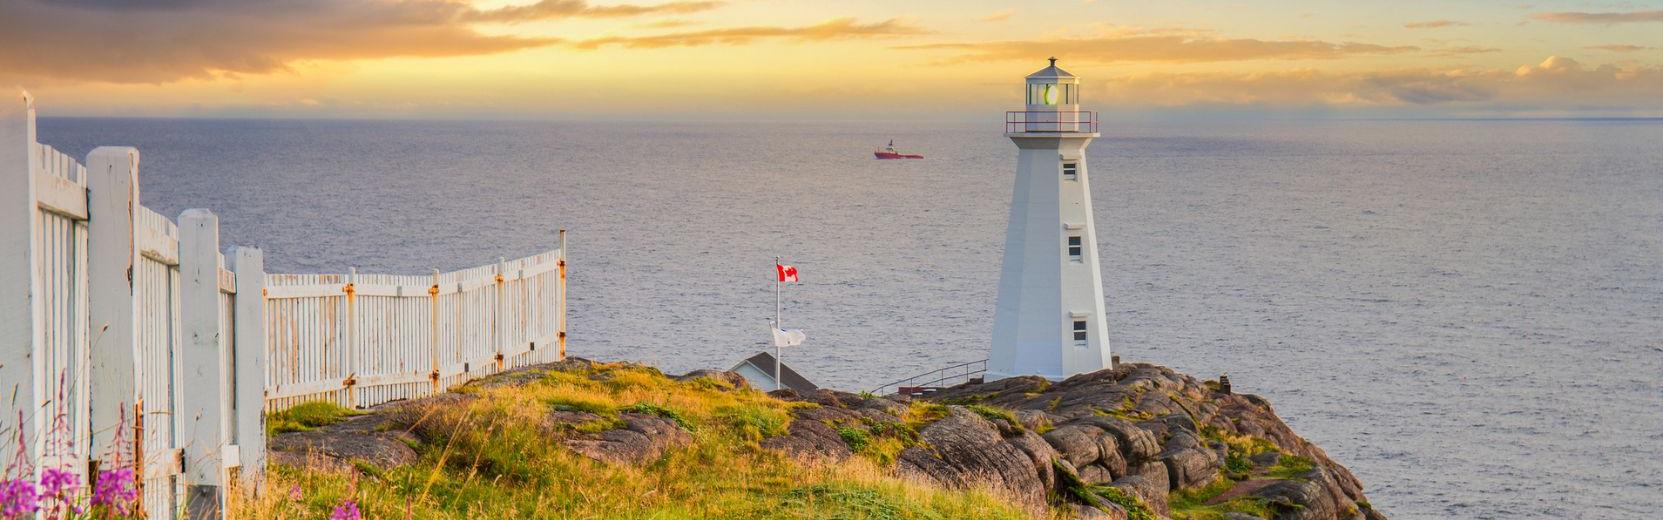 Kanada regionswahl nova Scotia Leuchtturm